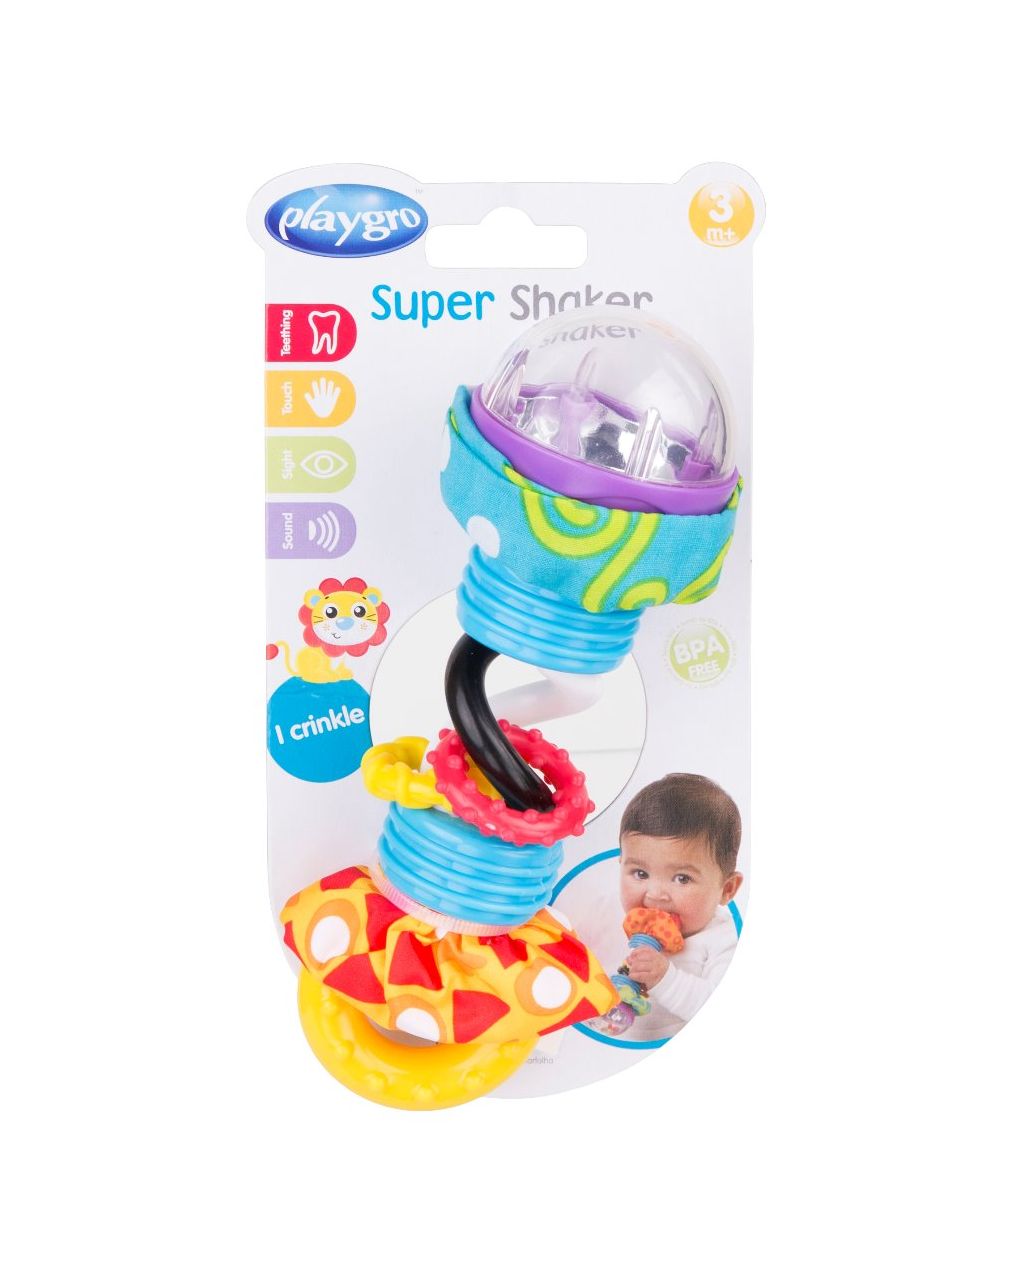 Super shaker rattle + teether - Playgro